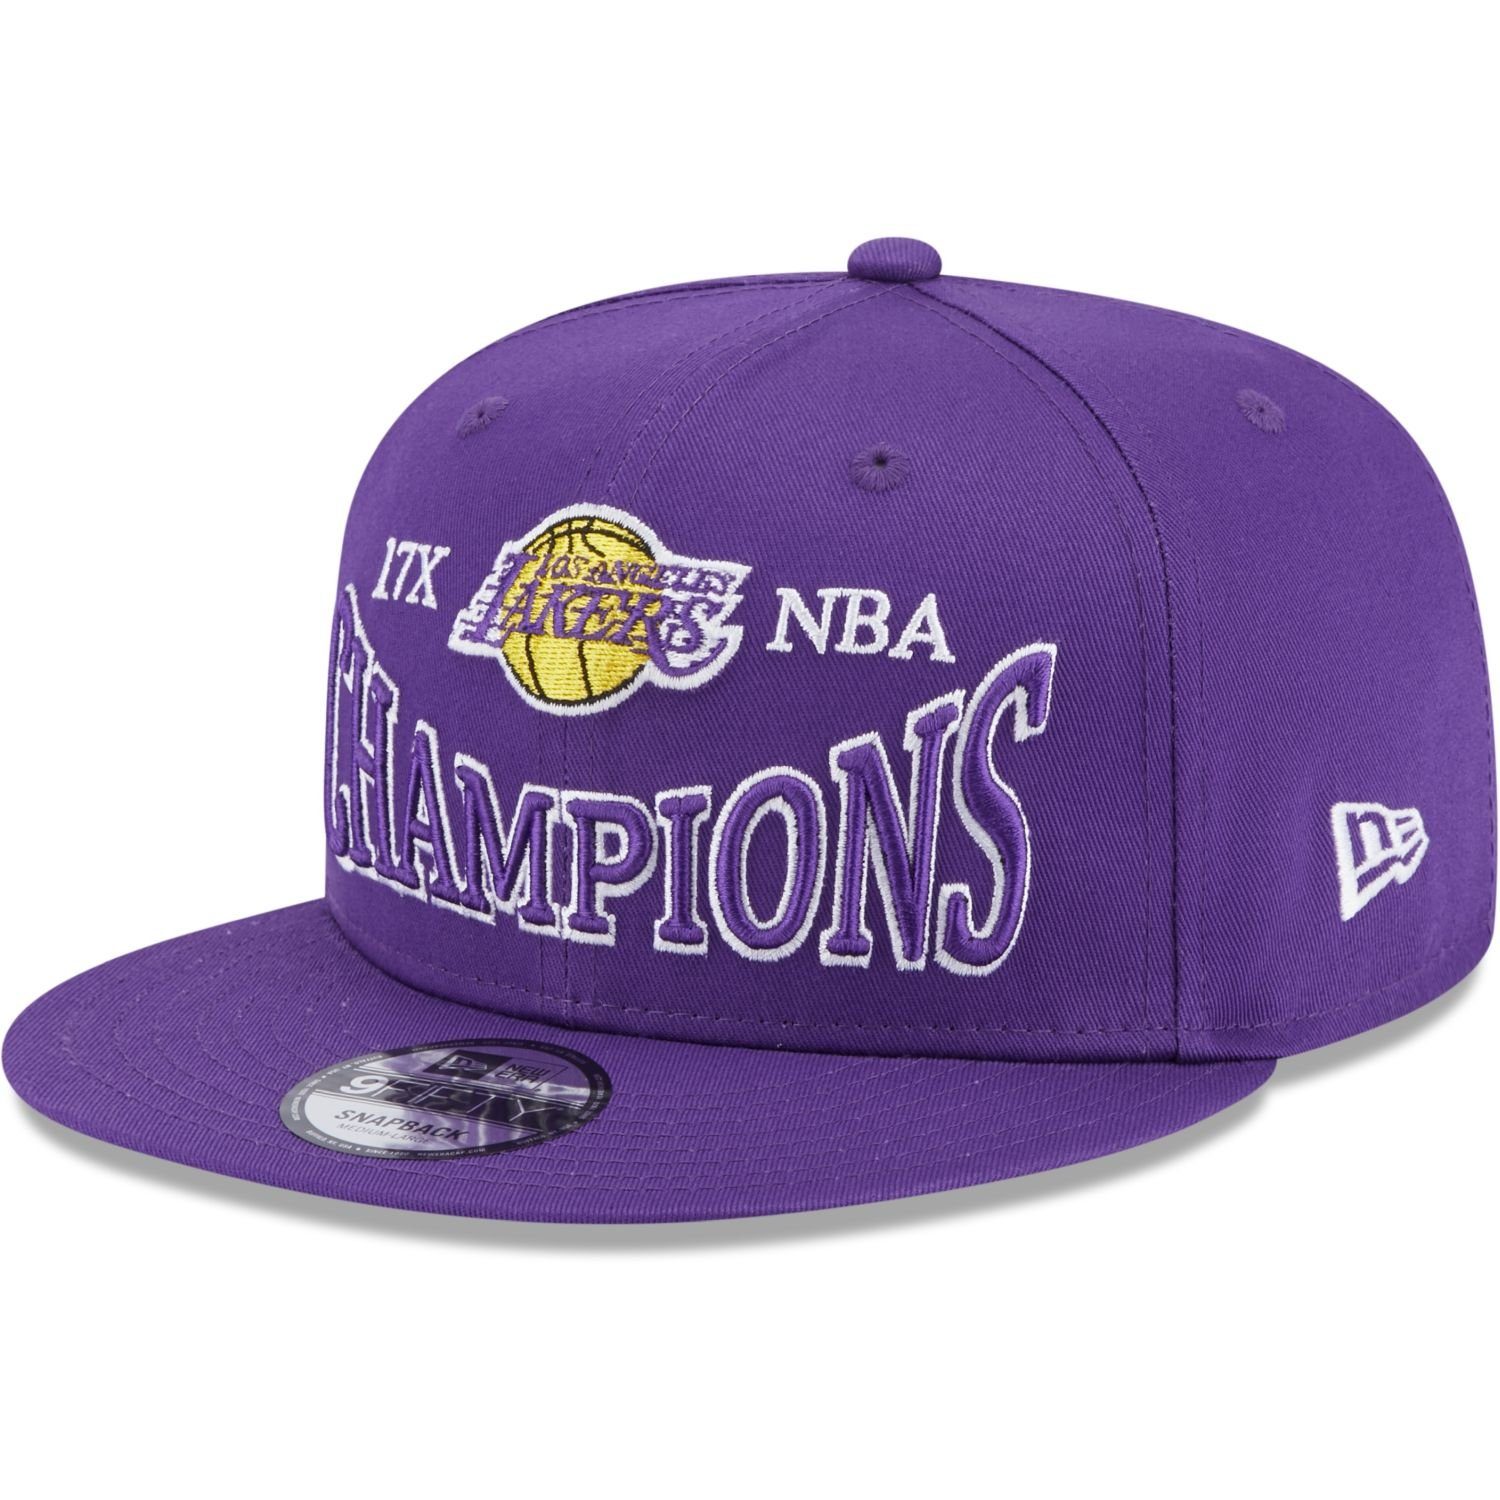 New Era Snapback Cap 9FIFTY Champions Los Angeles Lakers